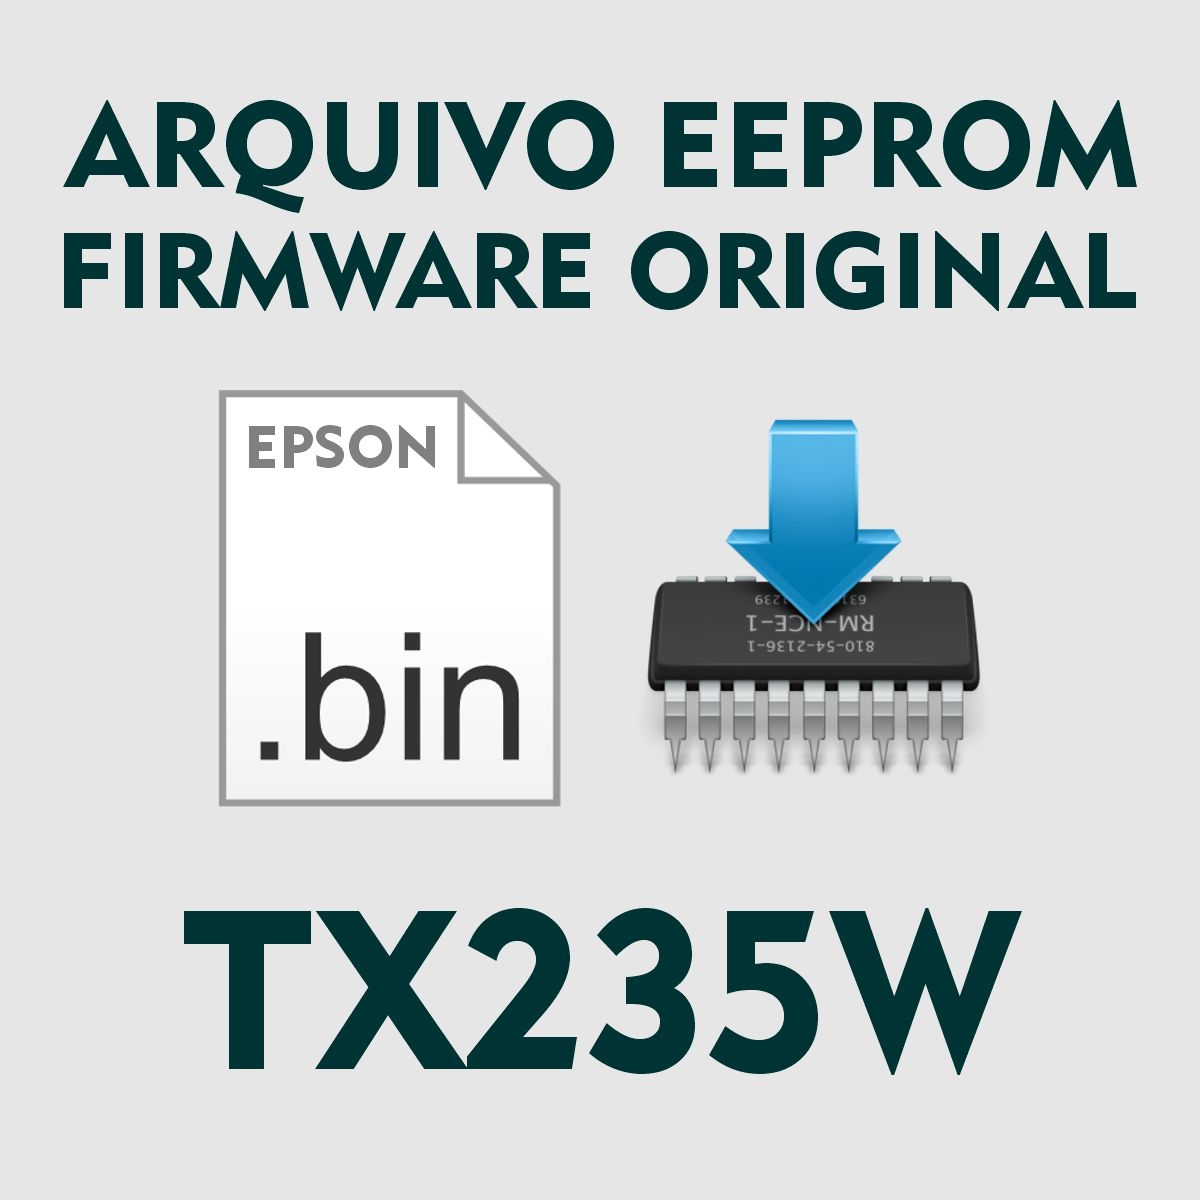 Epson TX235W | Arquivo de Eeprom Firmware .bin - Original